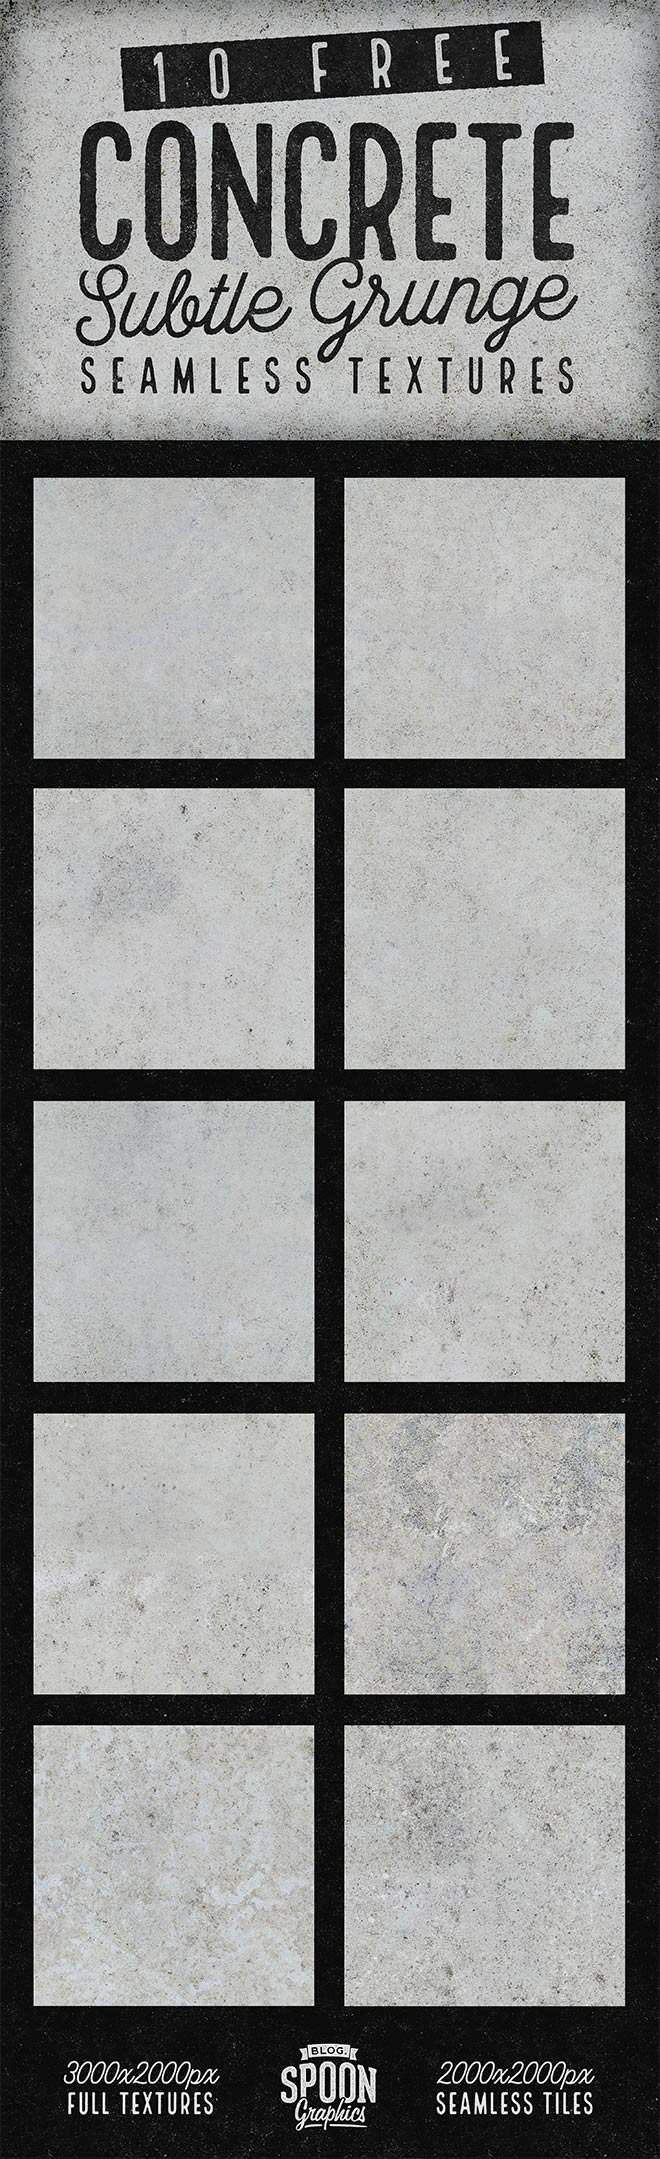 10 Free Seamless Subtle Grunge Concrete Textures